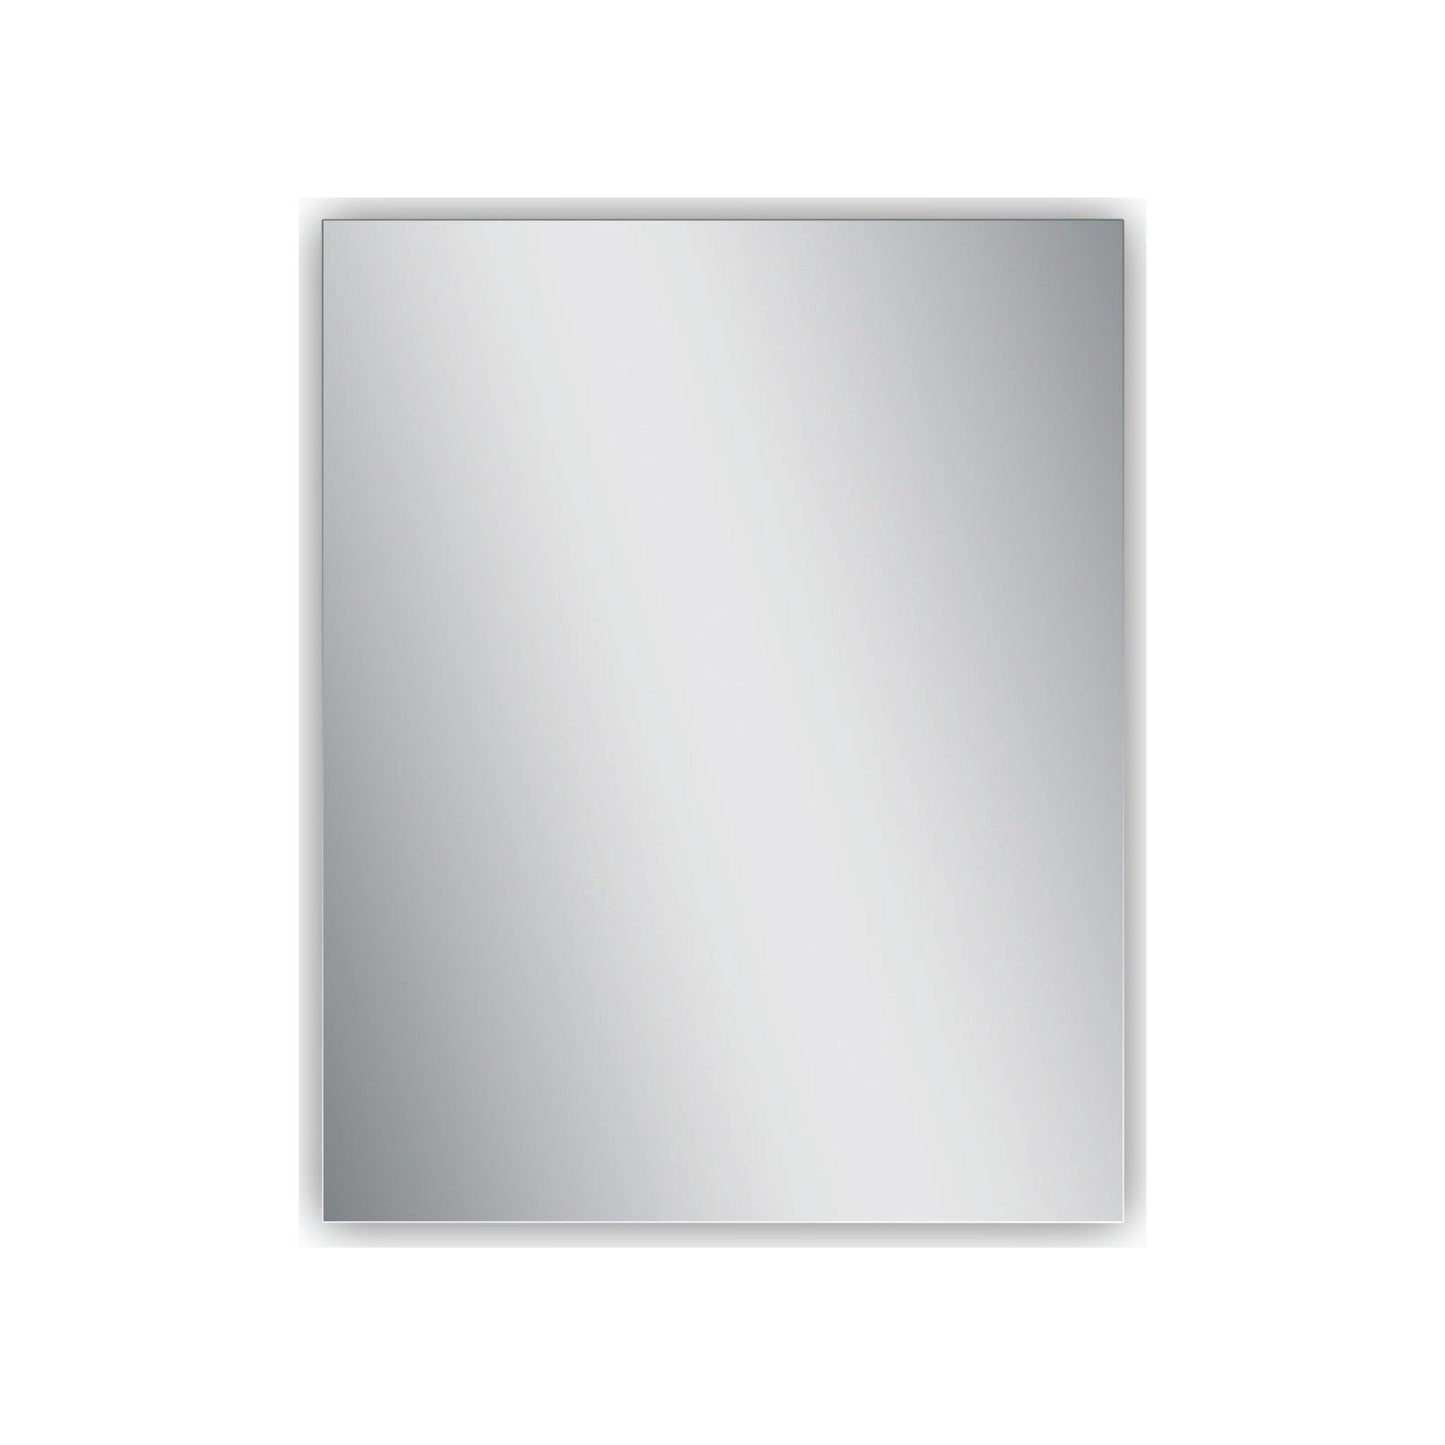 Ratel 39" x 31" Rectangular Plain Mirror